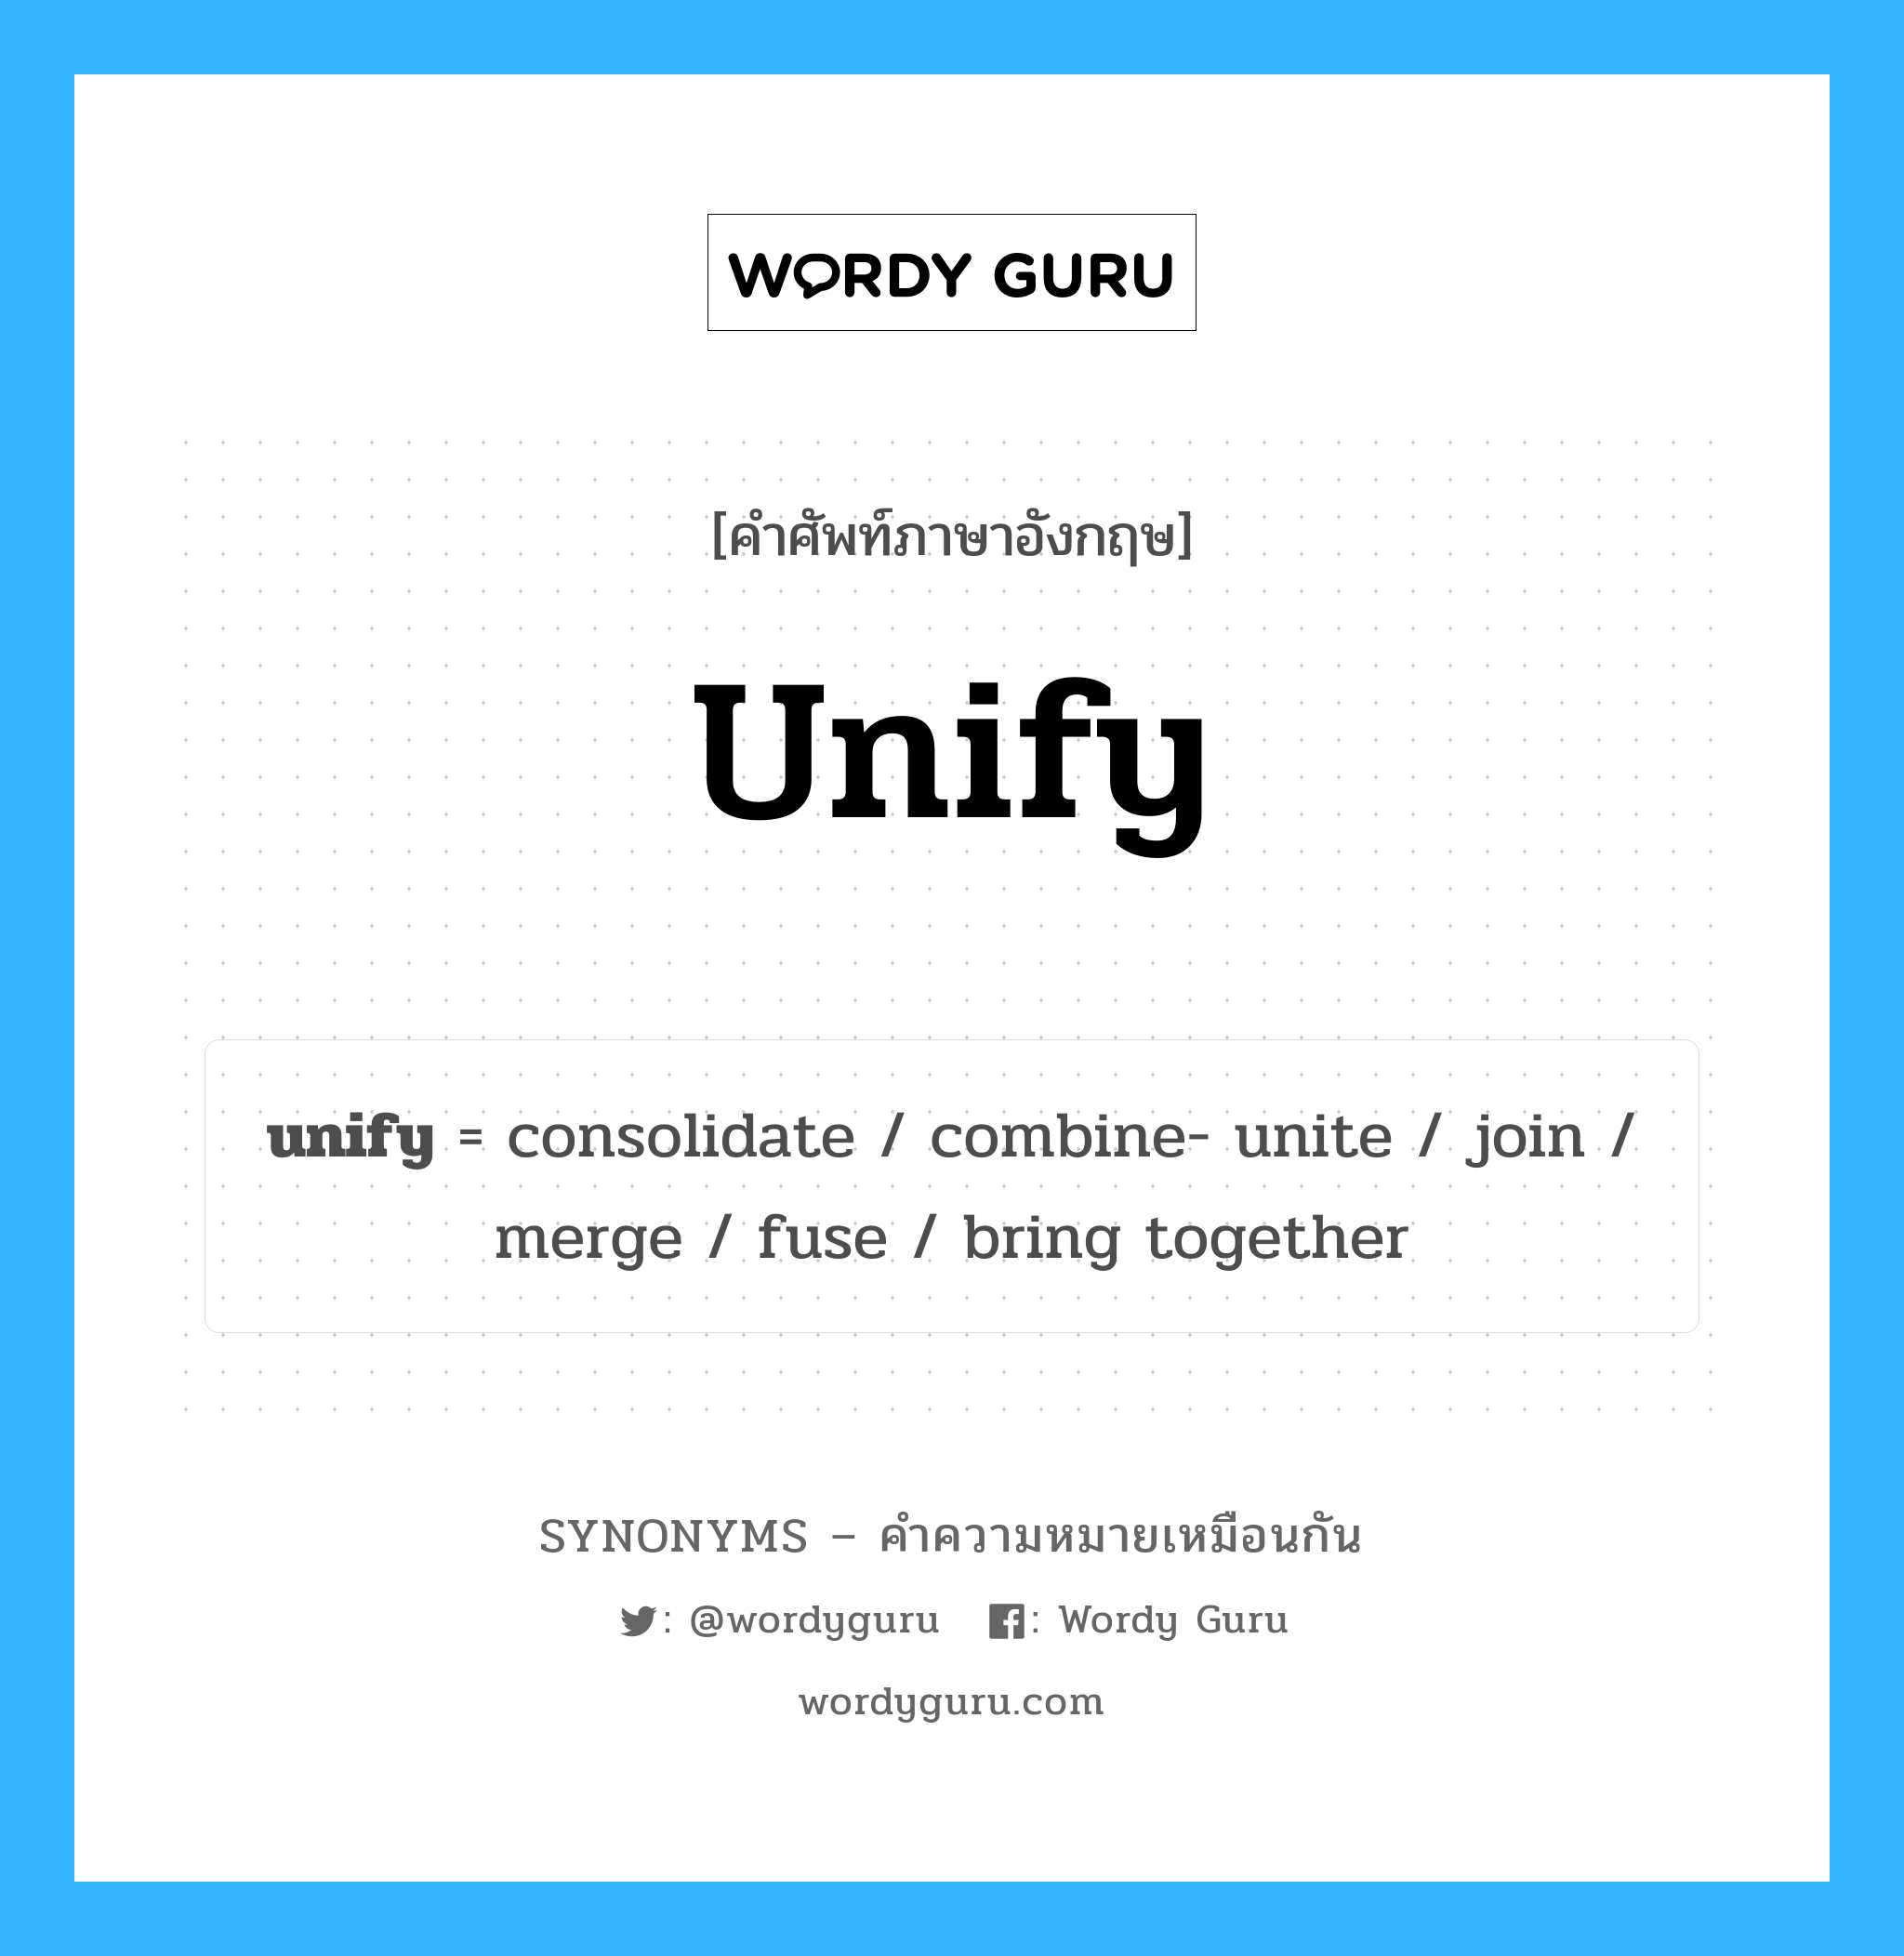 combine- unite เป็นหนึ่งใน unify และมีคำอื่น ๆ อีกดังนี้, คำศัพท์ภาษาอังกฤษ combine- unite ความหมายคล้ายกันกับ unify แปลว่า -รวมรวมกัน หมวด unify